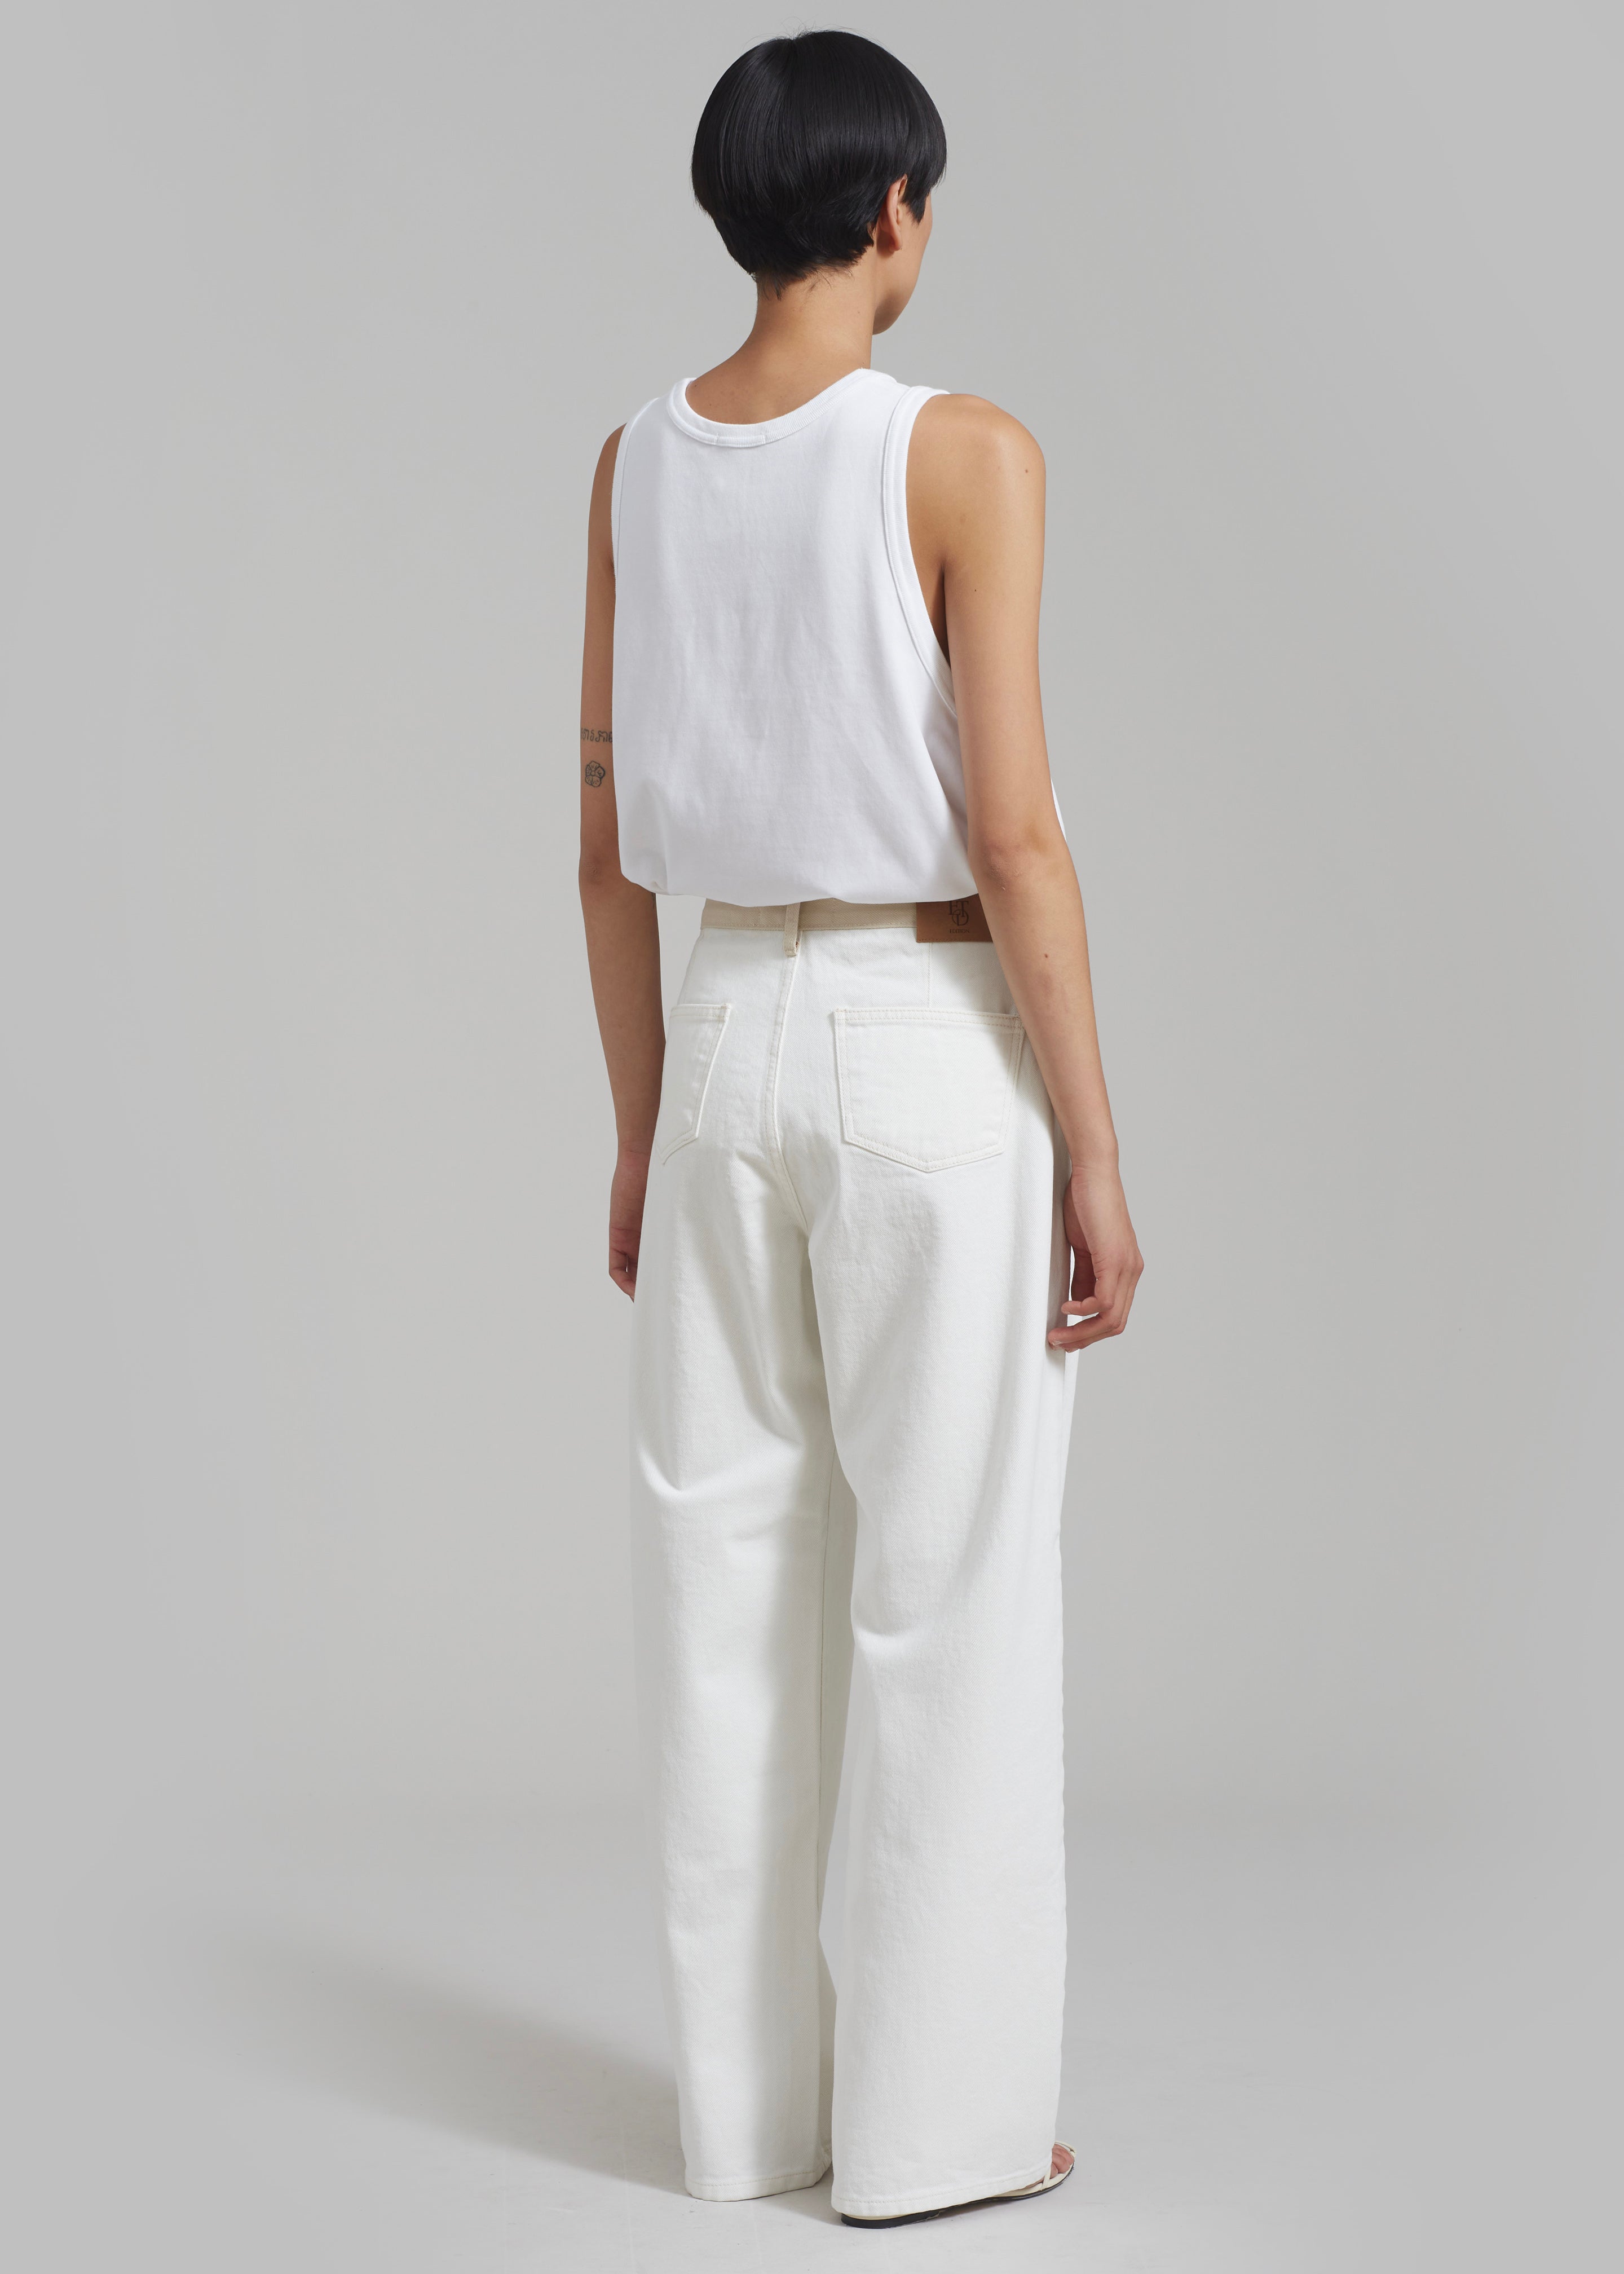 Hayla Contrast Denim Pants - Off White/Beige - 12